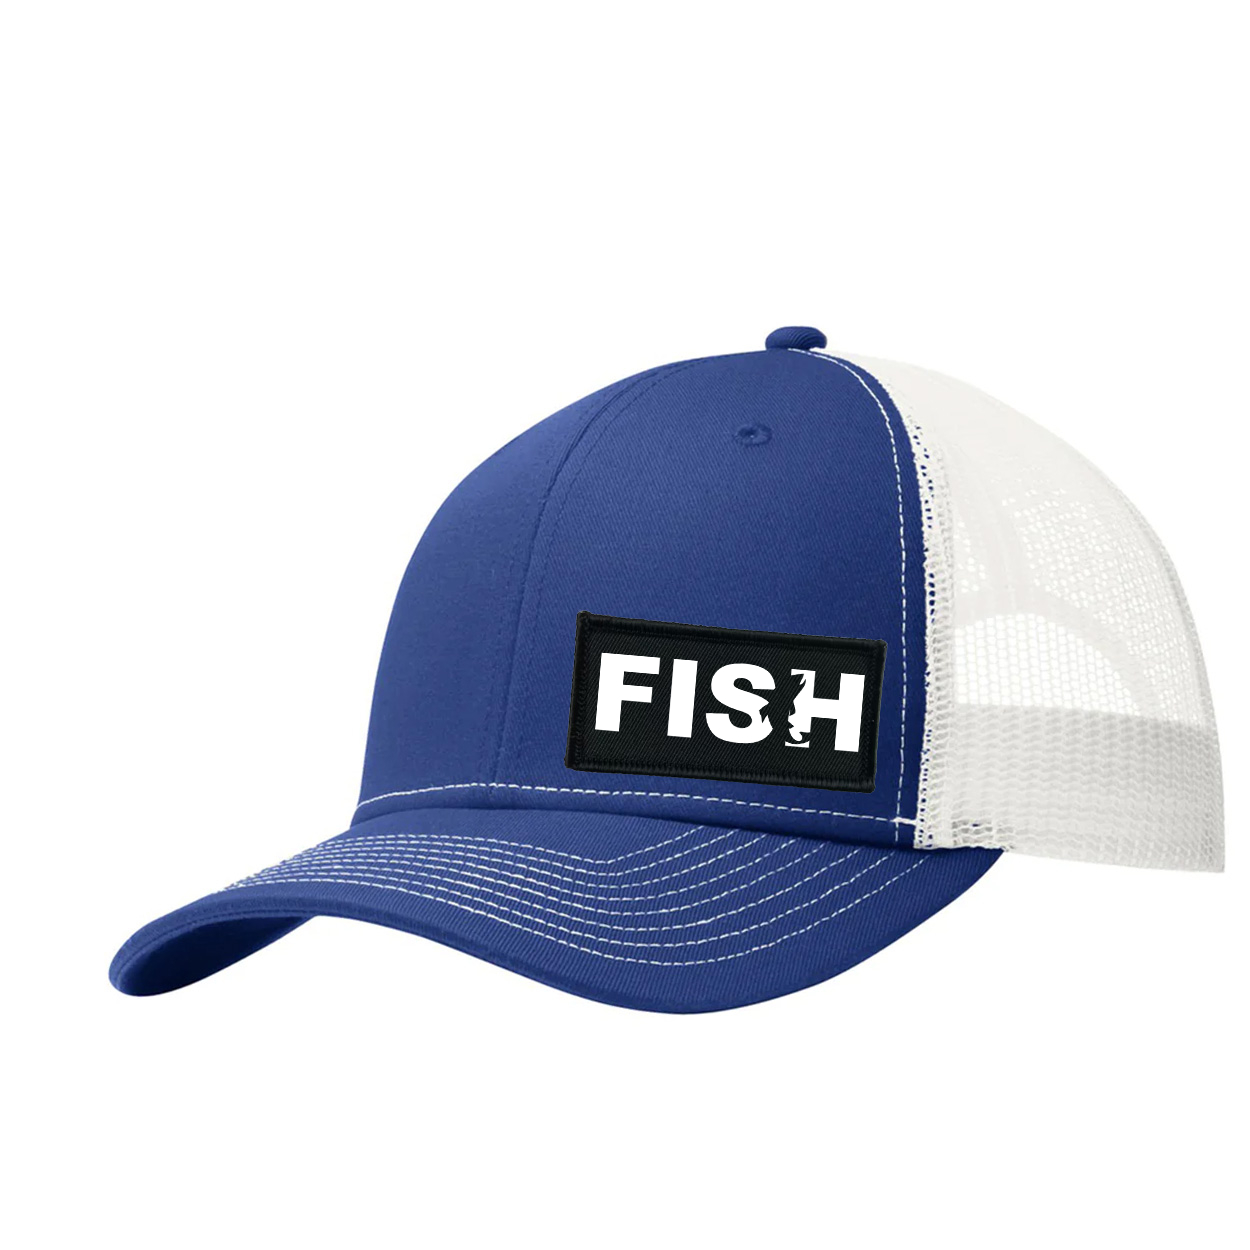 Fish Catch Logo Night Out Woven Patch Snapback Trucker Hat Dark Royal/White (White Logo)